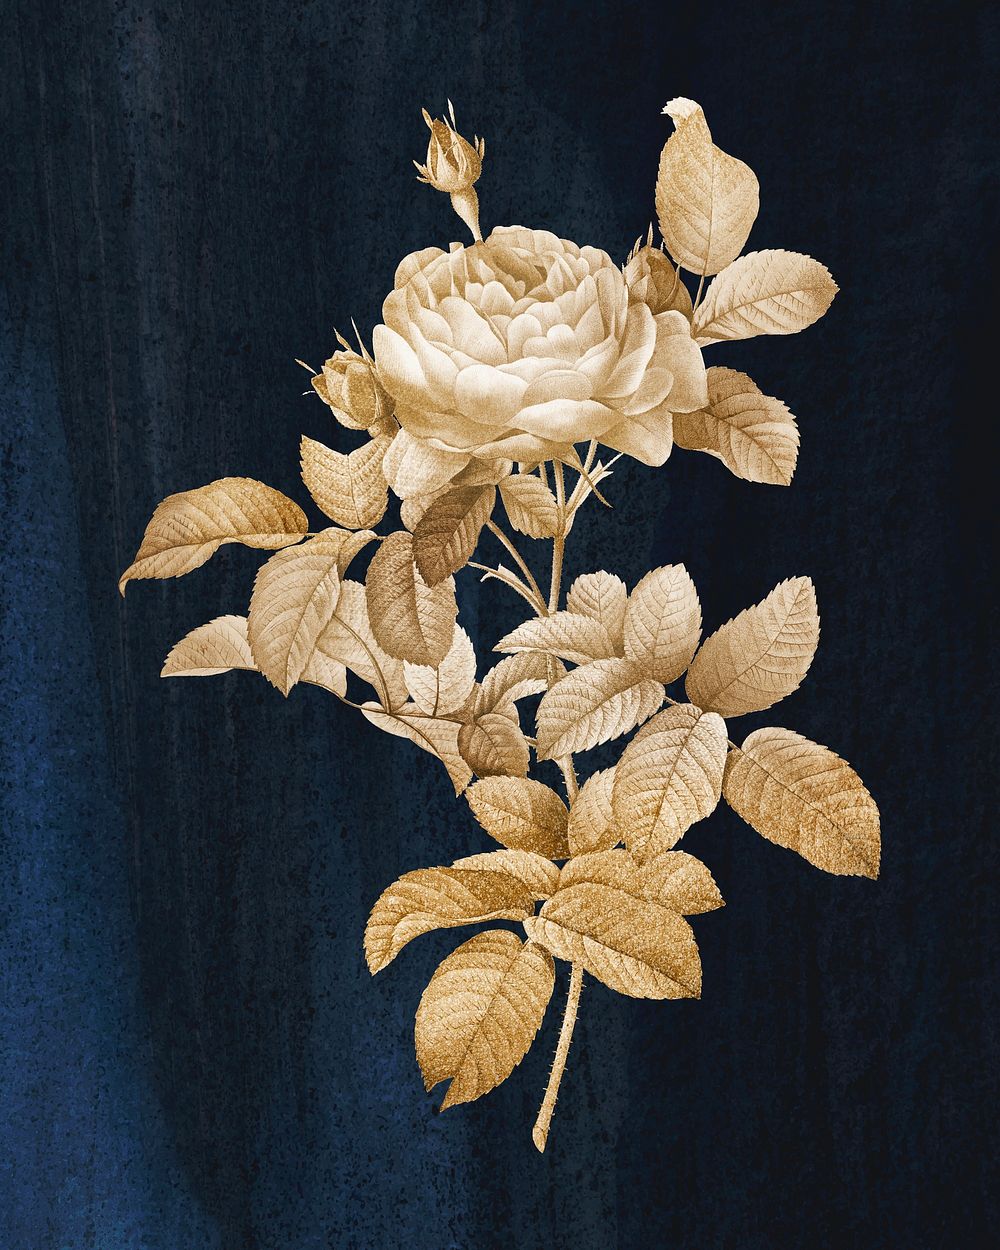 Golden rose vintage wall art print poster design remix from original artwork by Pierre-Joseph Redout&eacute;.